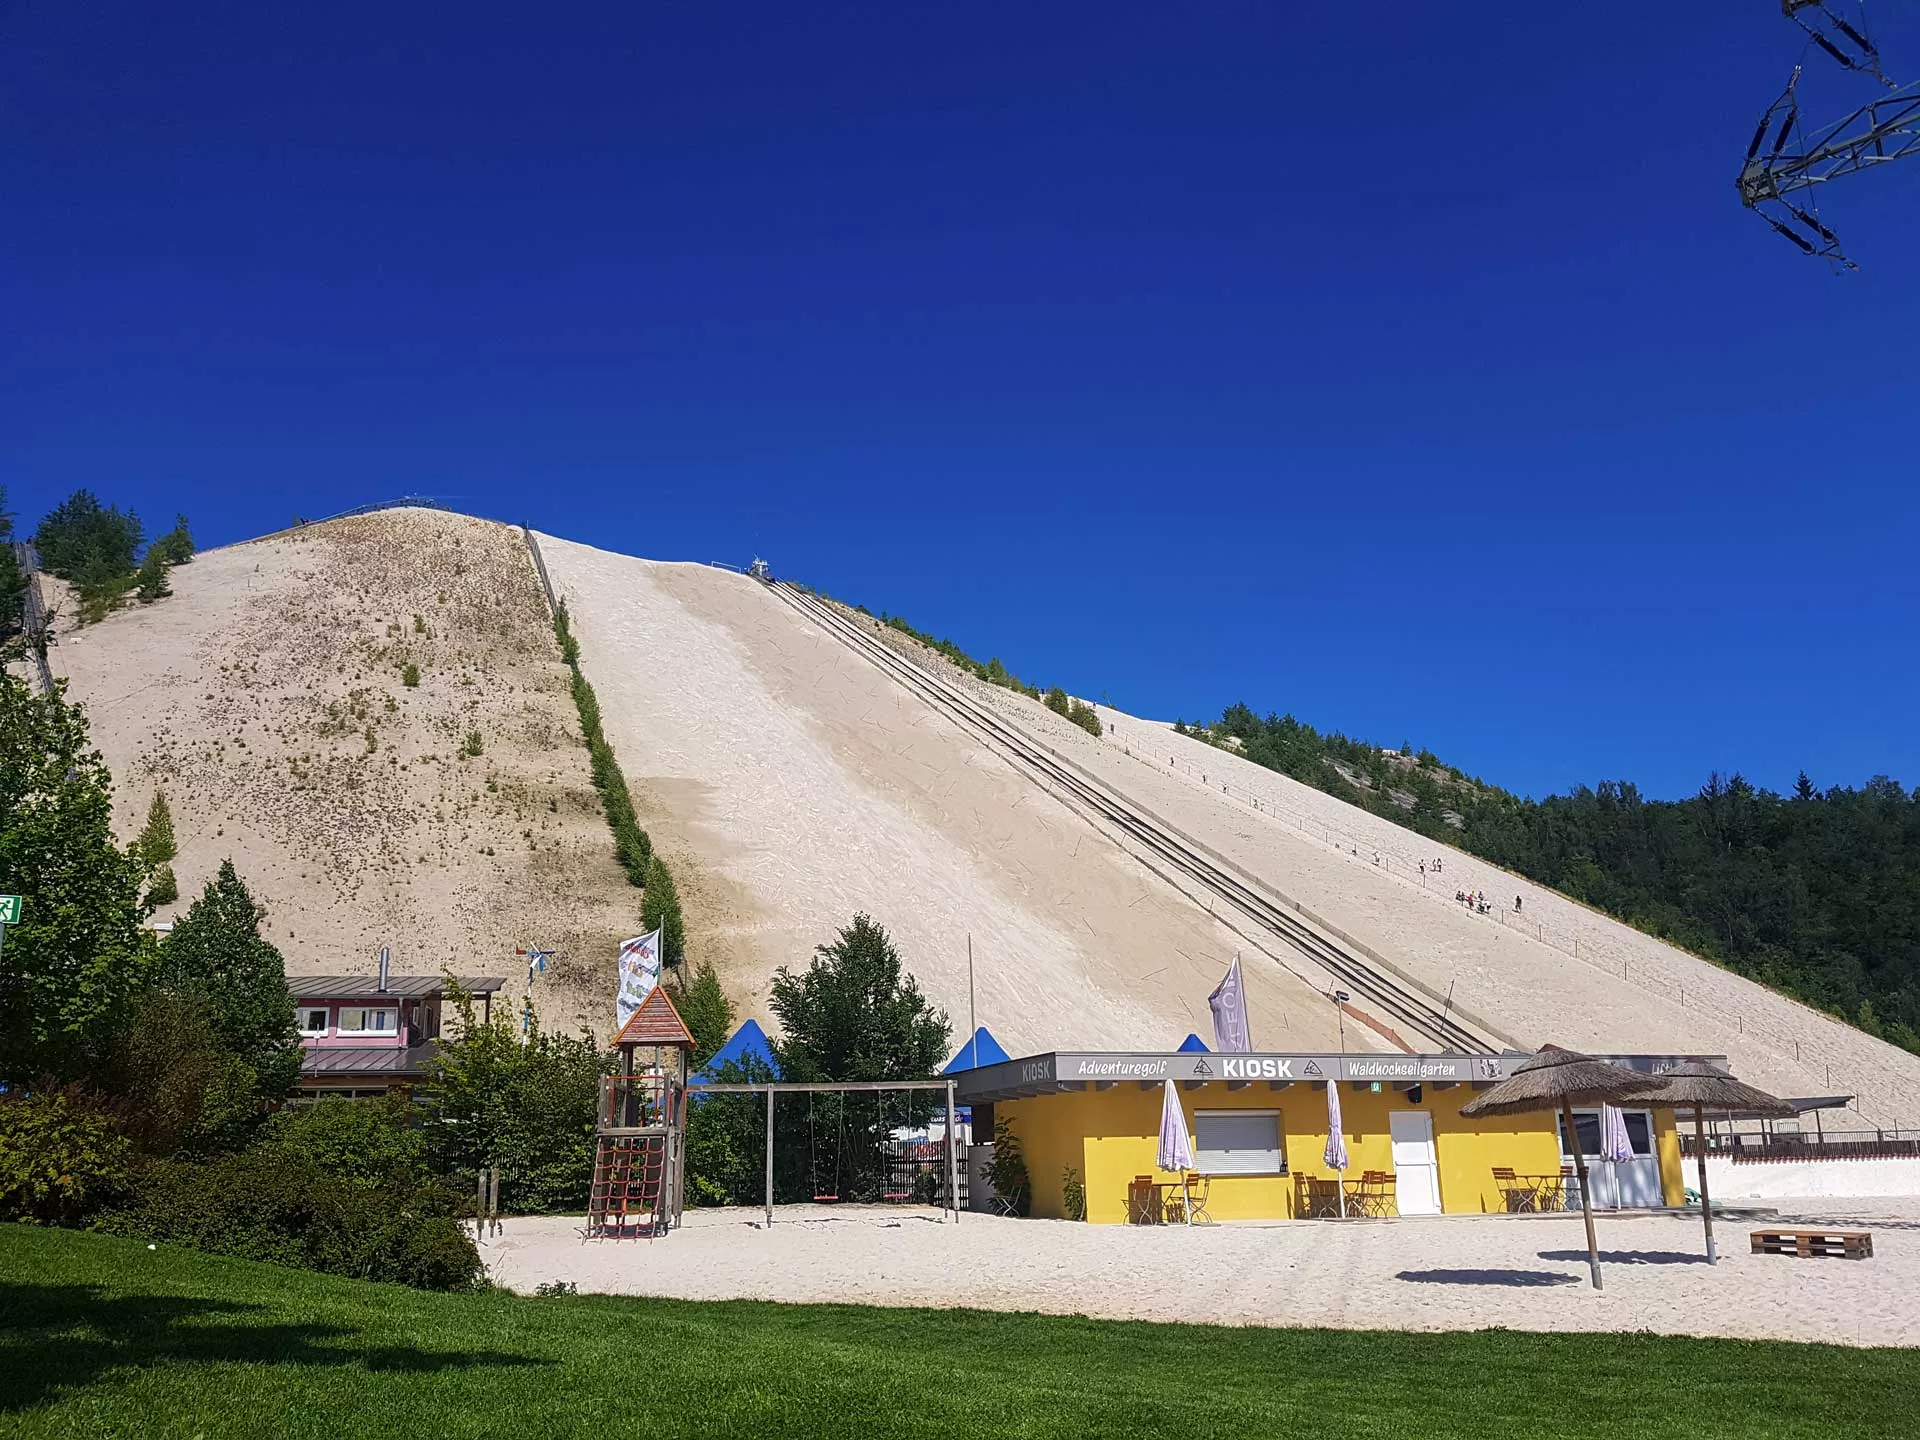 Monte Kaolino in Germany, Europe | Sandboarding - Rated 5.1